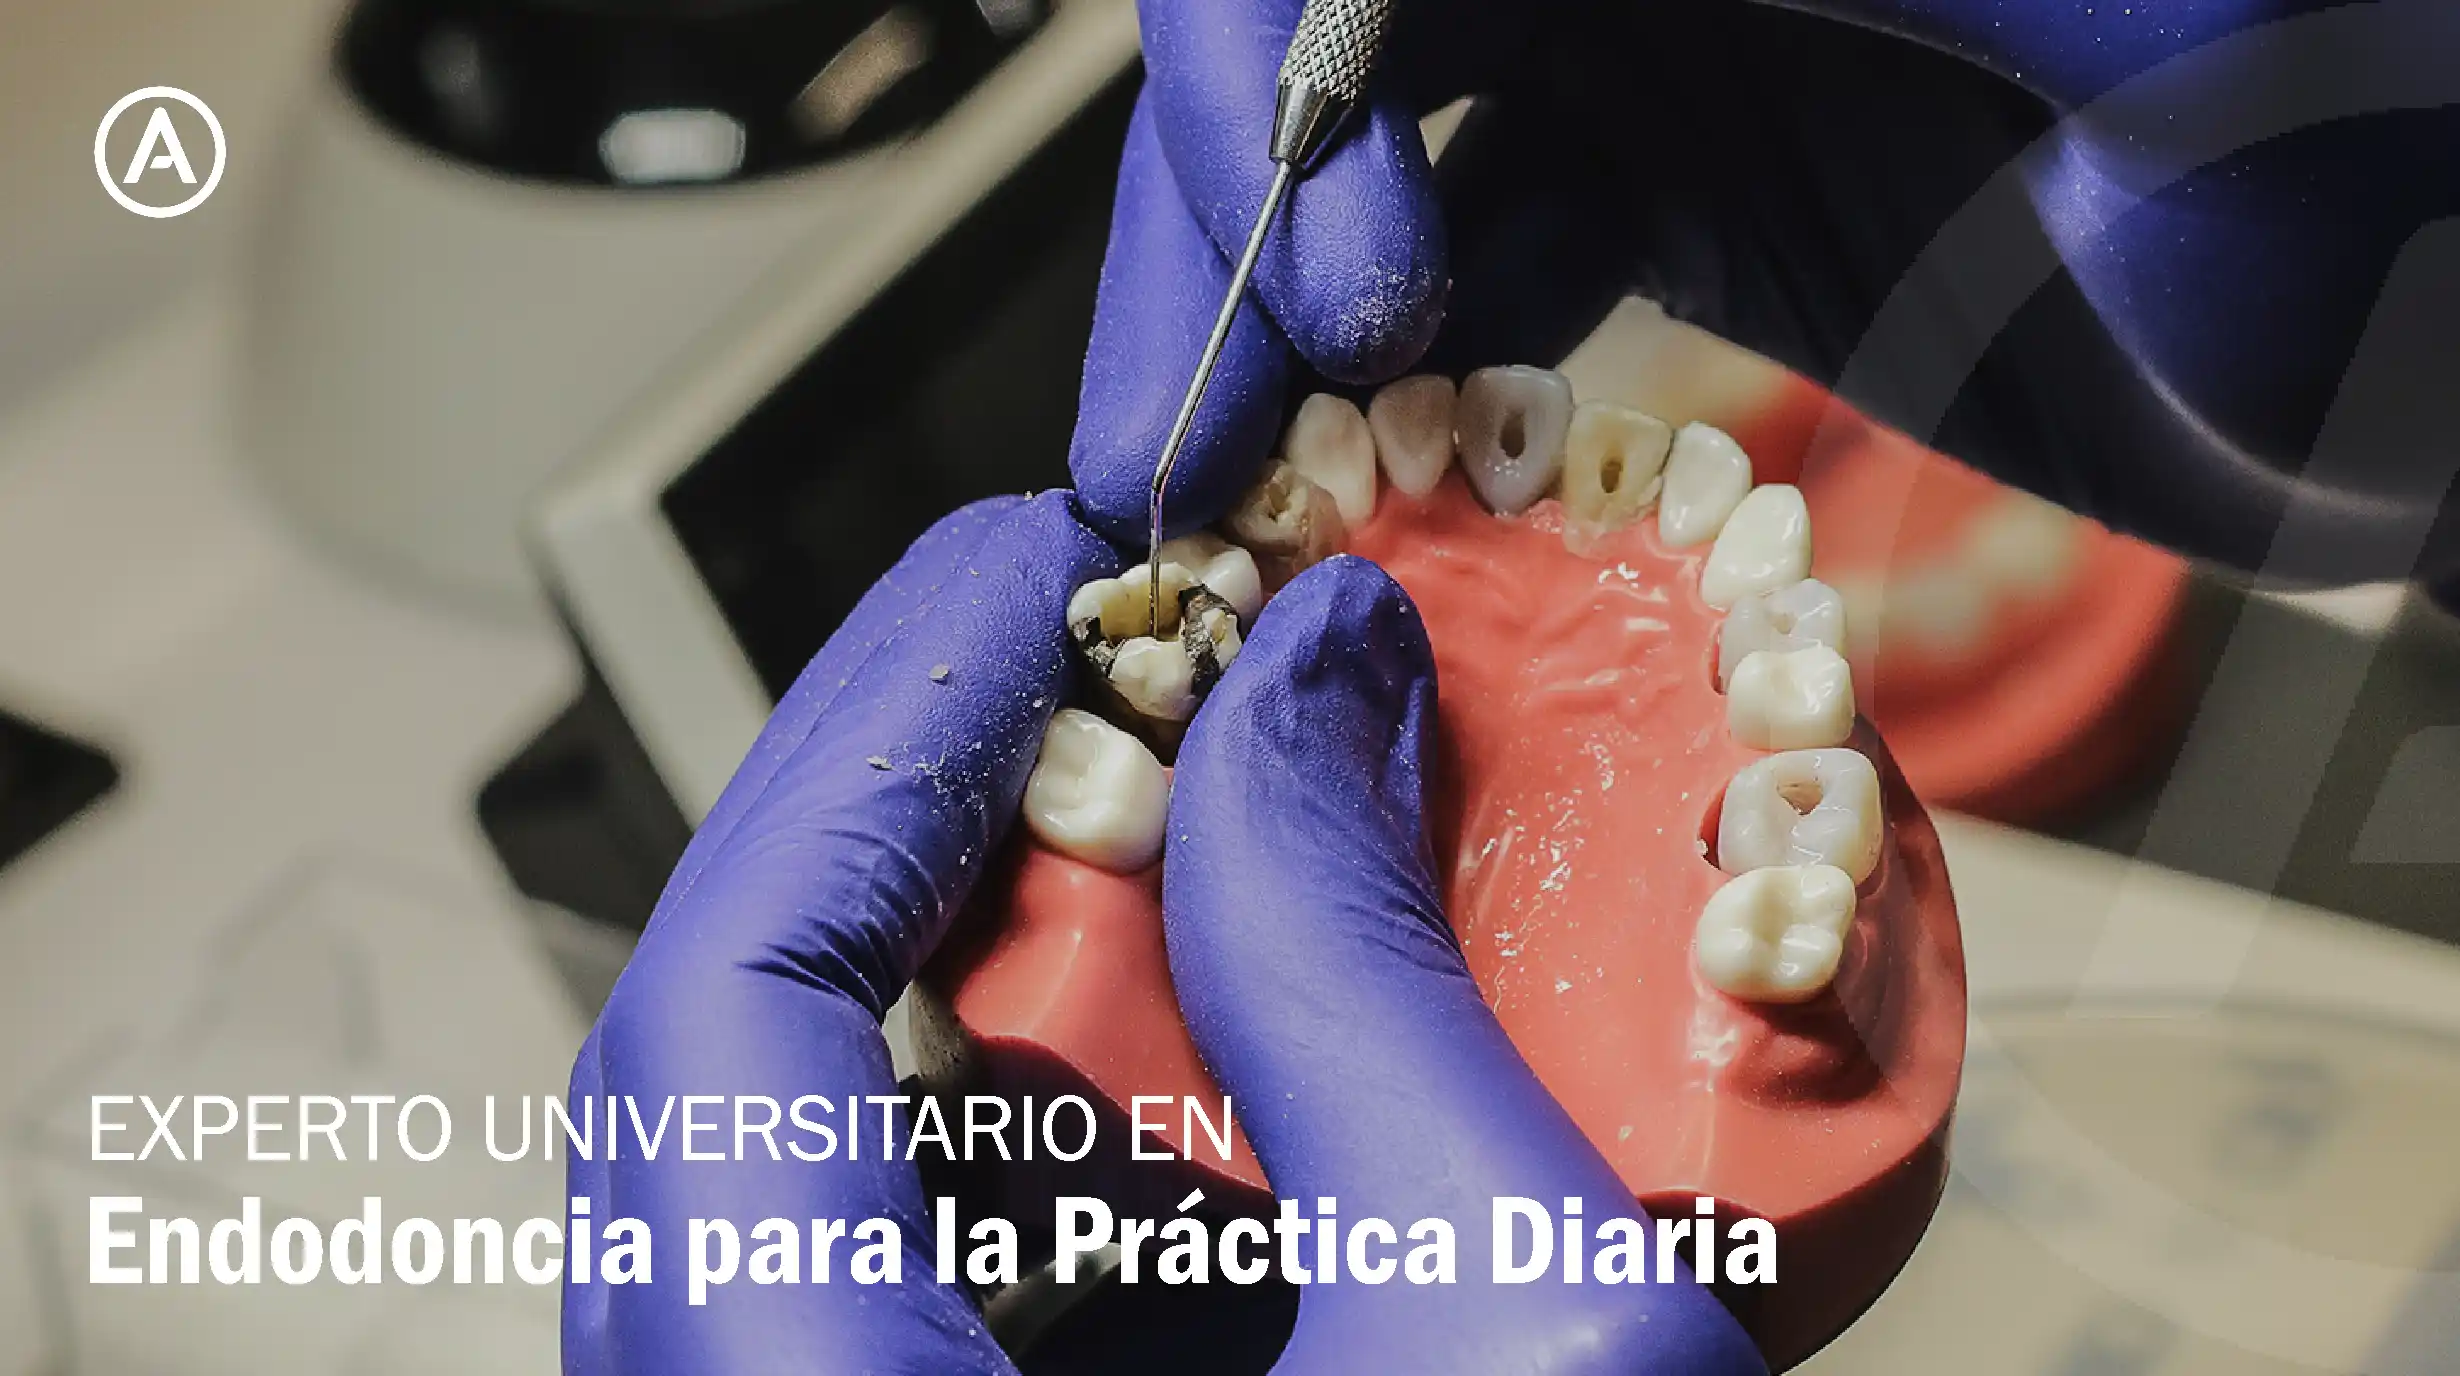 Experto Universitario en Endodoncia para la práctica diaria